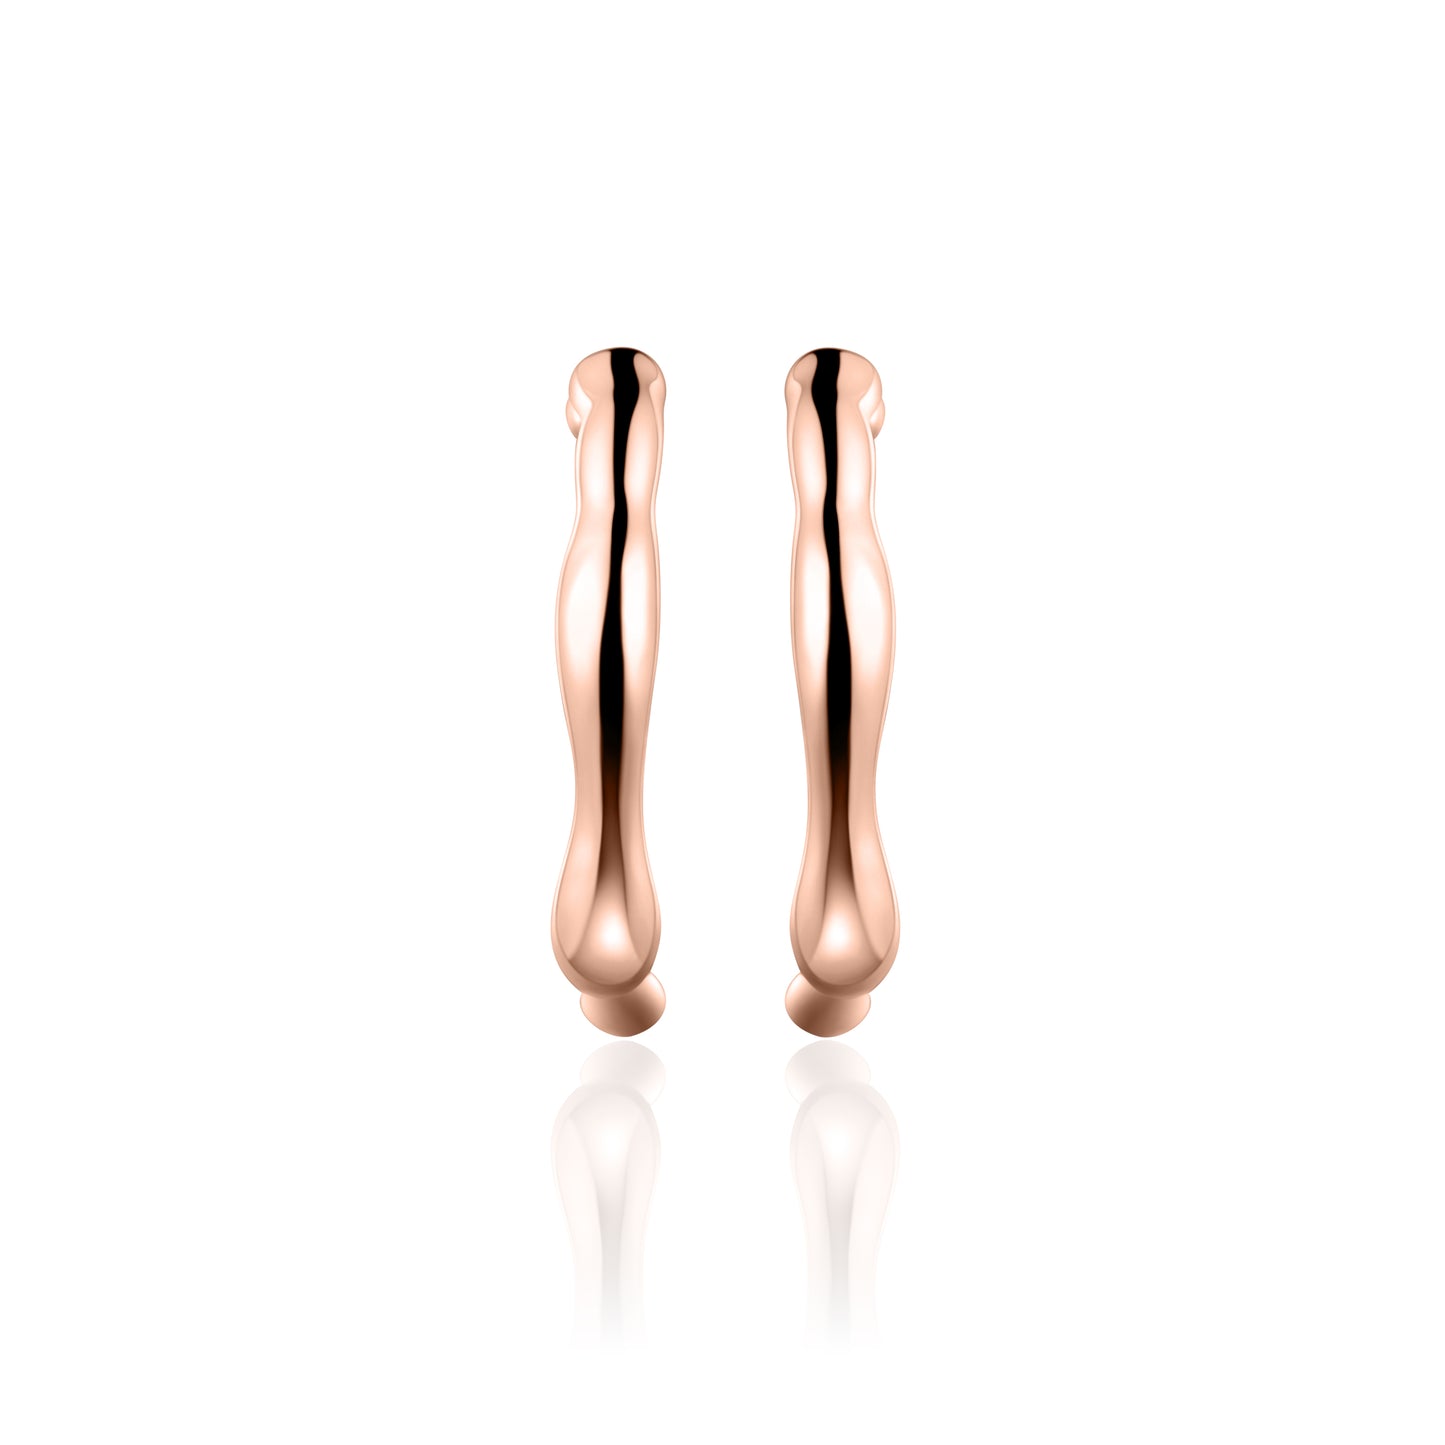 ORGANIC 24mm Hoop Earrings - Rose Gold - John Ross Jewellers